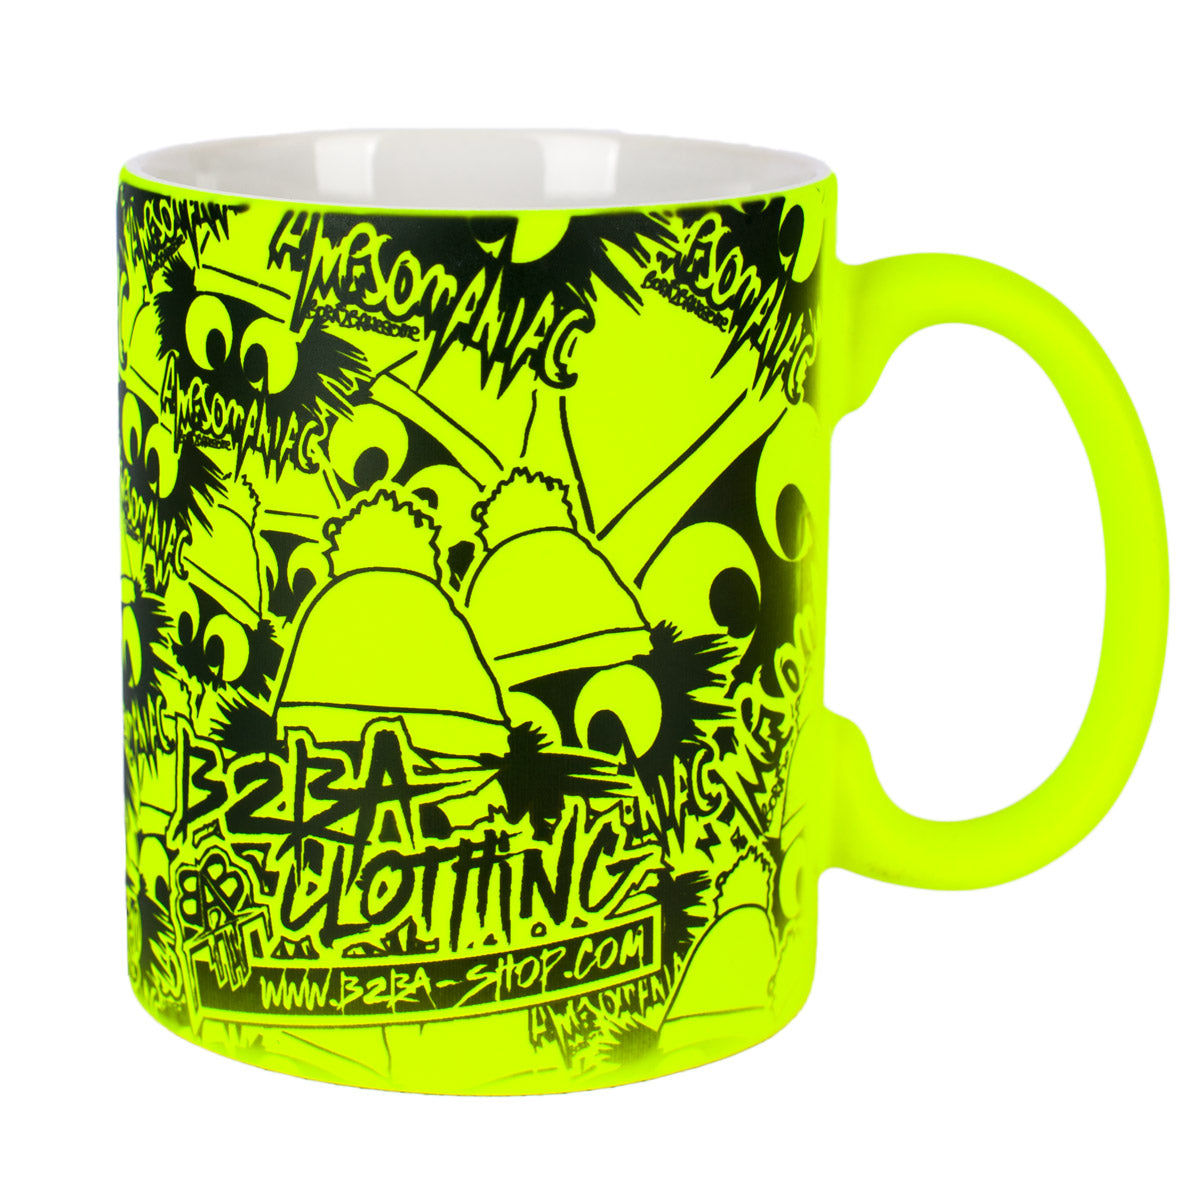 Coffee Cup "Awesomaniac" - B2BA Clothing